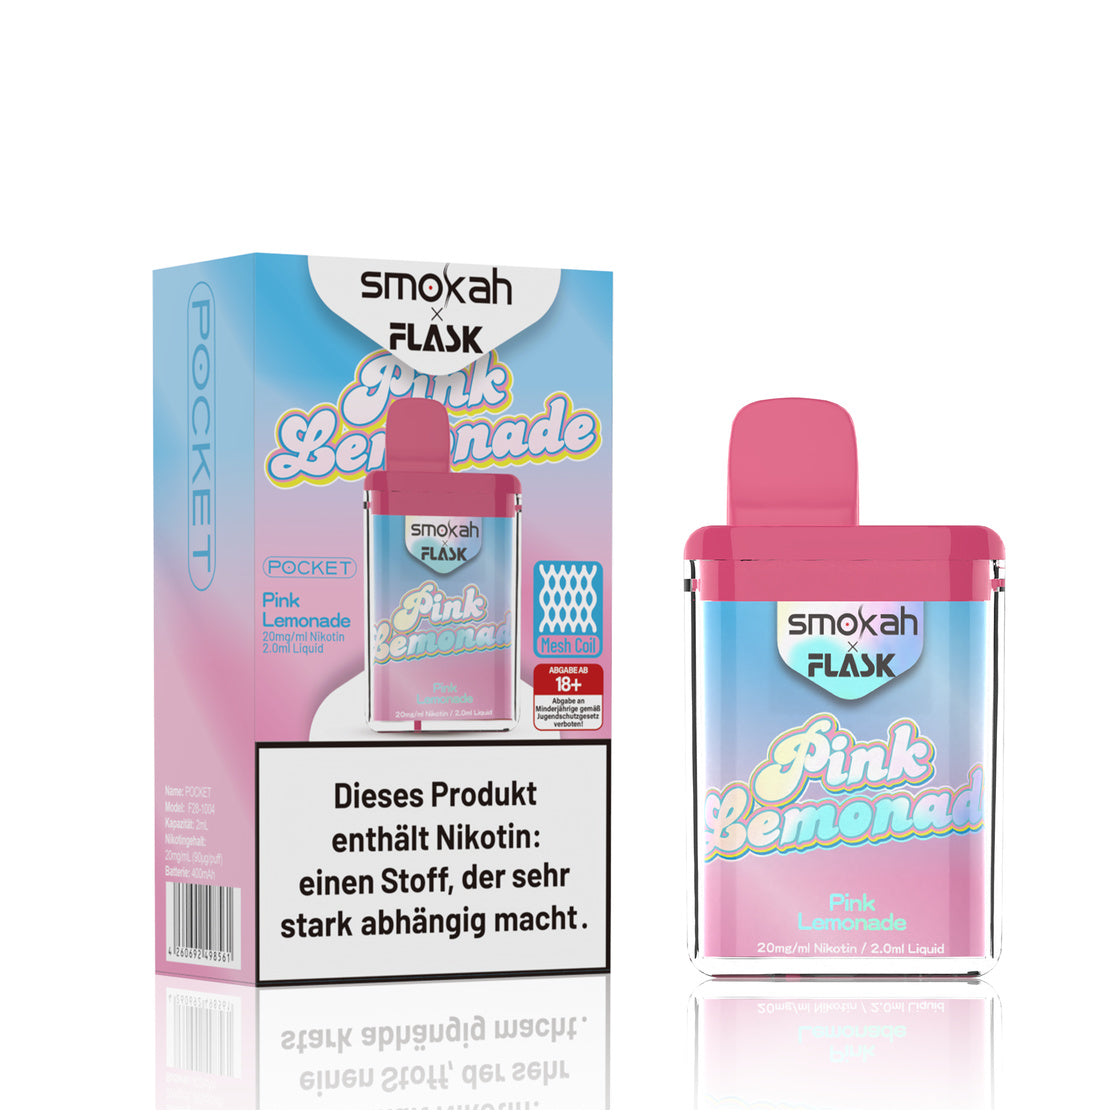 Smokah x Flask Pocket Vape: Pink Lemonade – Spritzig-süße Versuchung